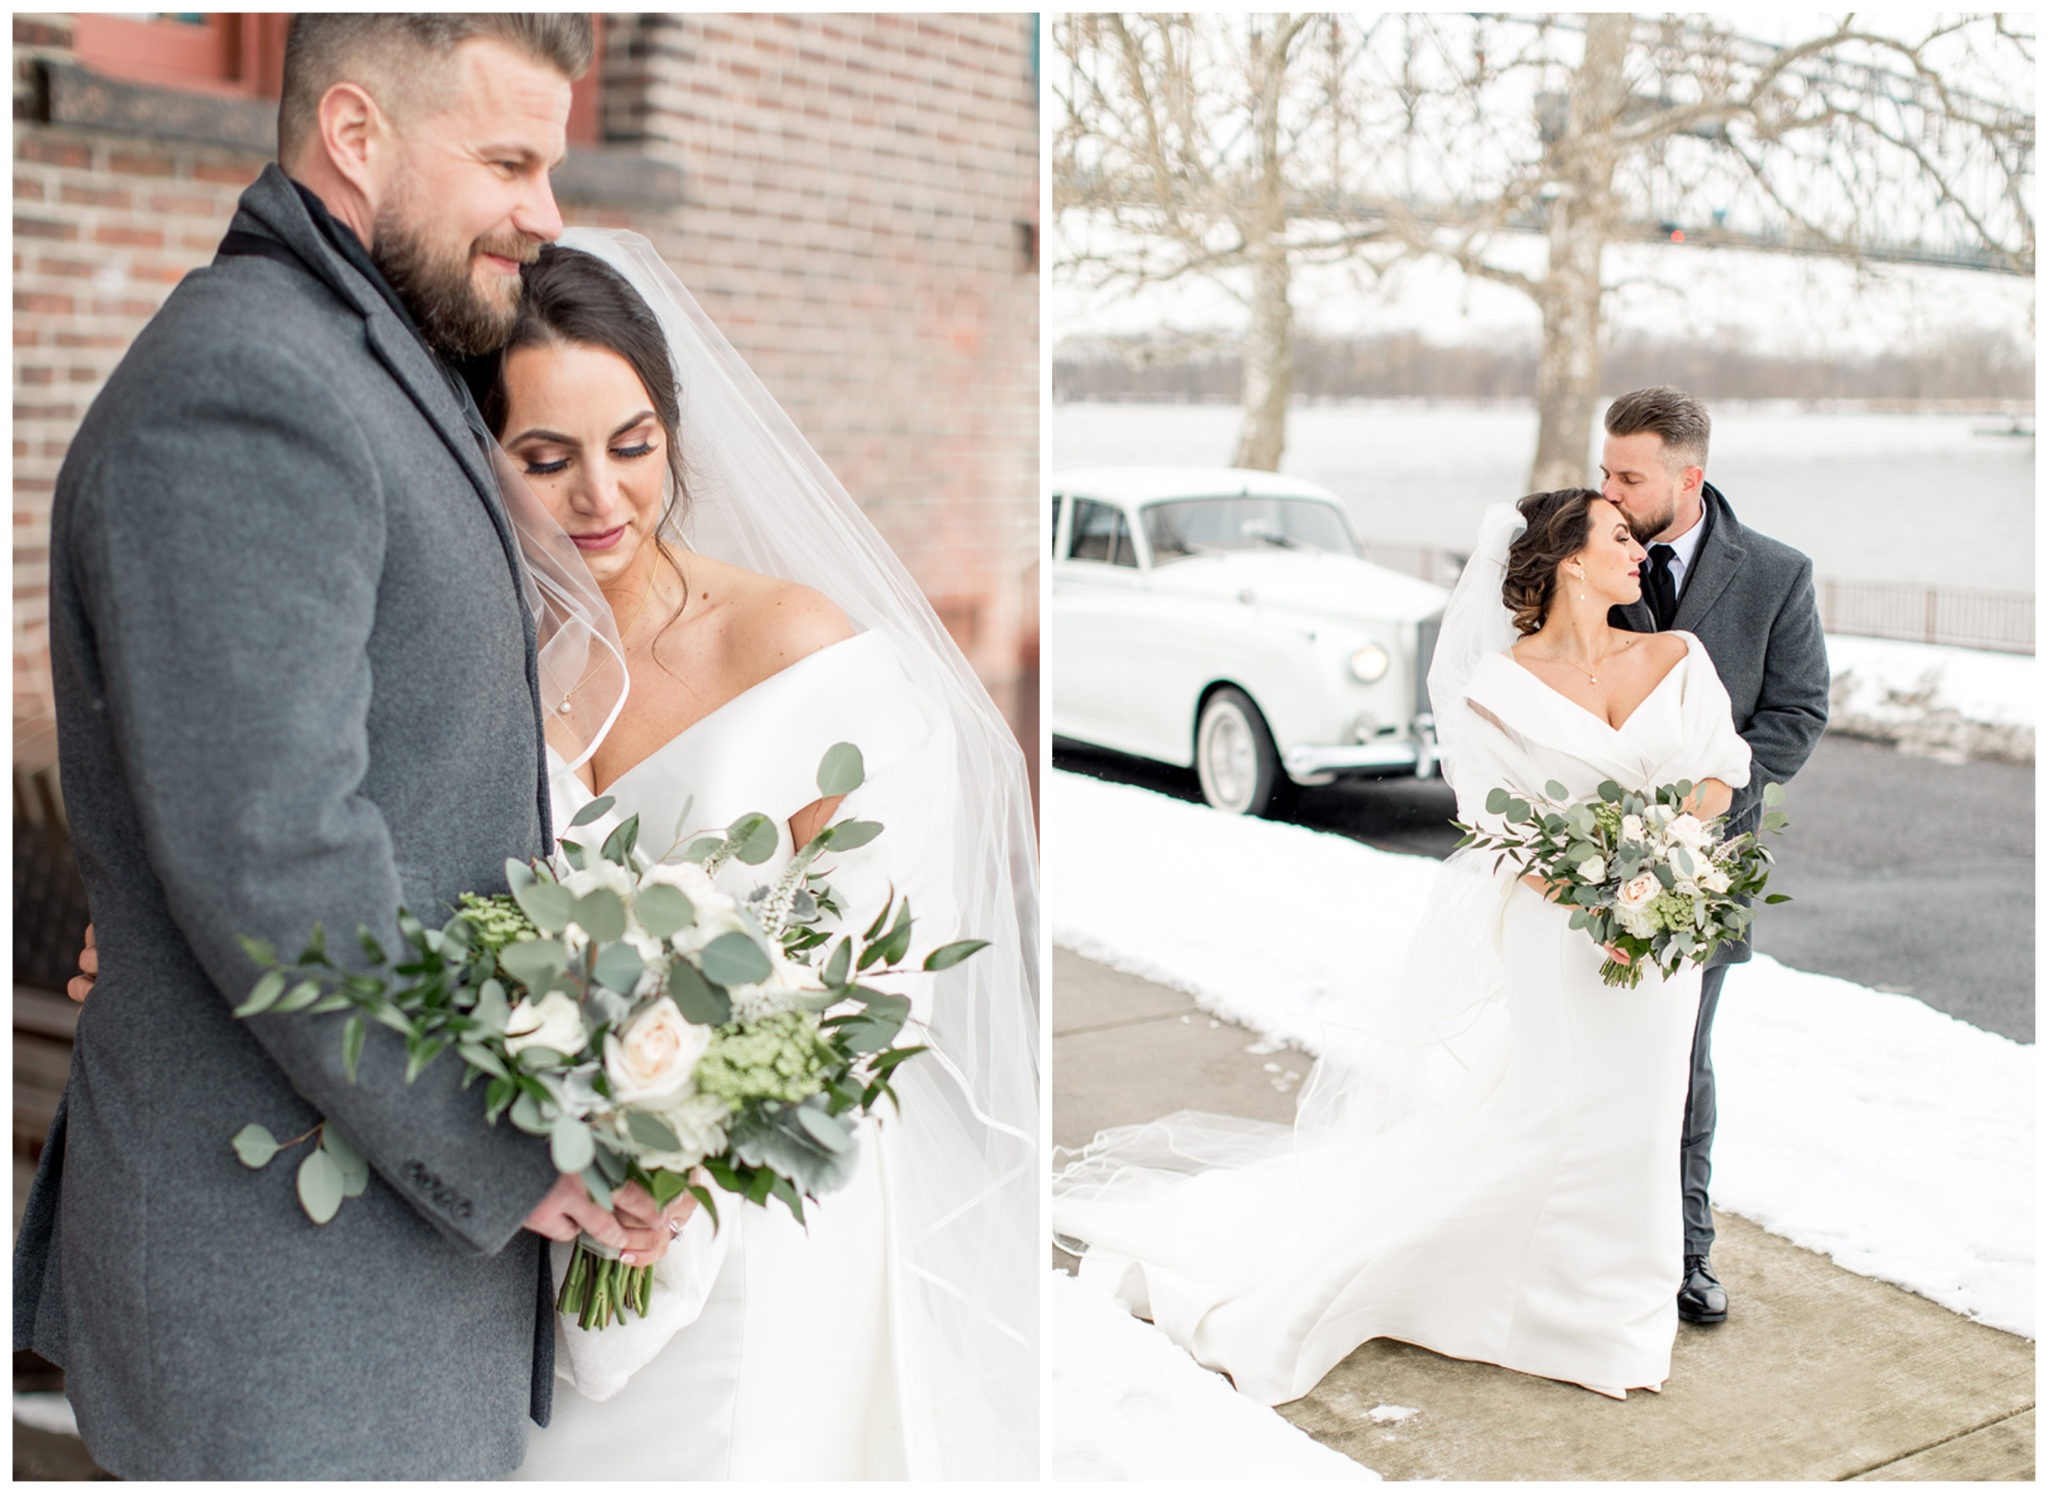 Dana & John | Classic & Snowy Winter Wedding - Petal & Glass Photography